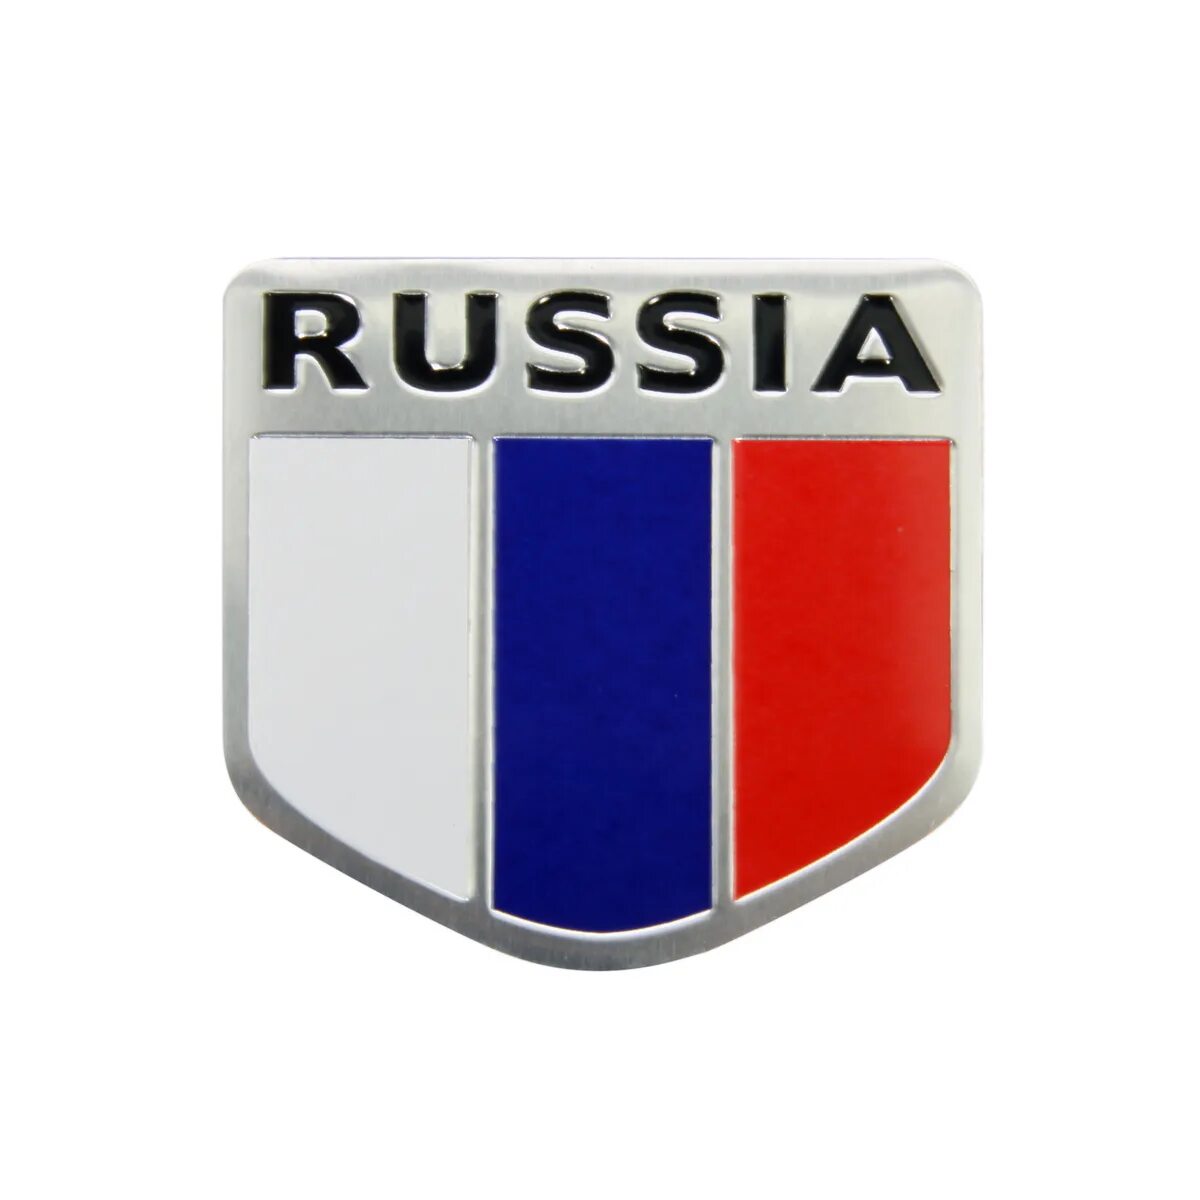 Россия 24 лого. Эмблема 50мм. Линкс раша лого. Ротакс Россия лого. Gb emblem russia